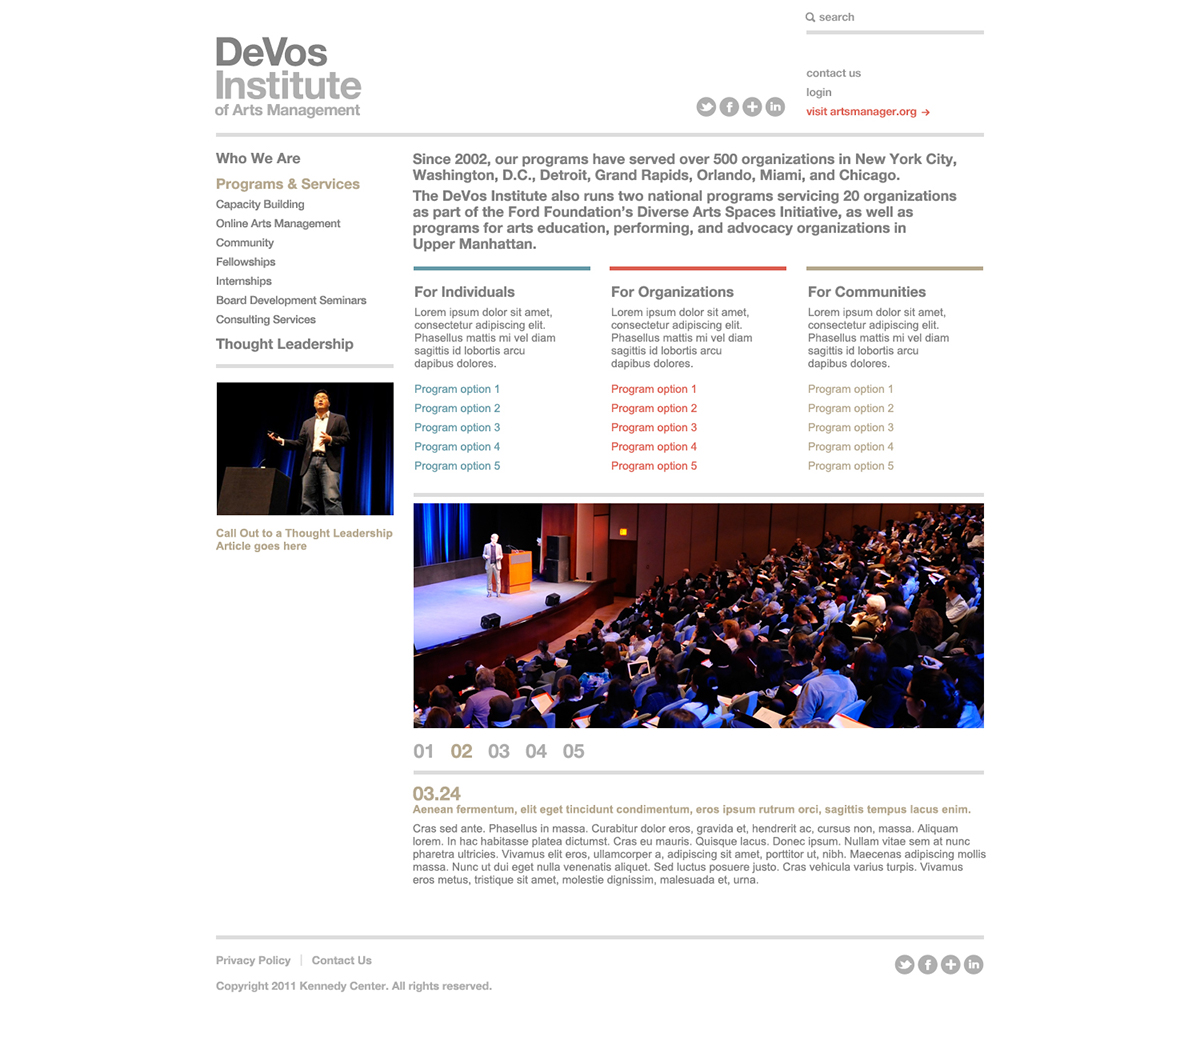 DeVos Institute arts management Kennedy Center minimalist design PERFORMING arts ballet symphony orchestra opera